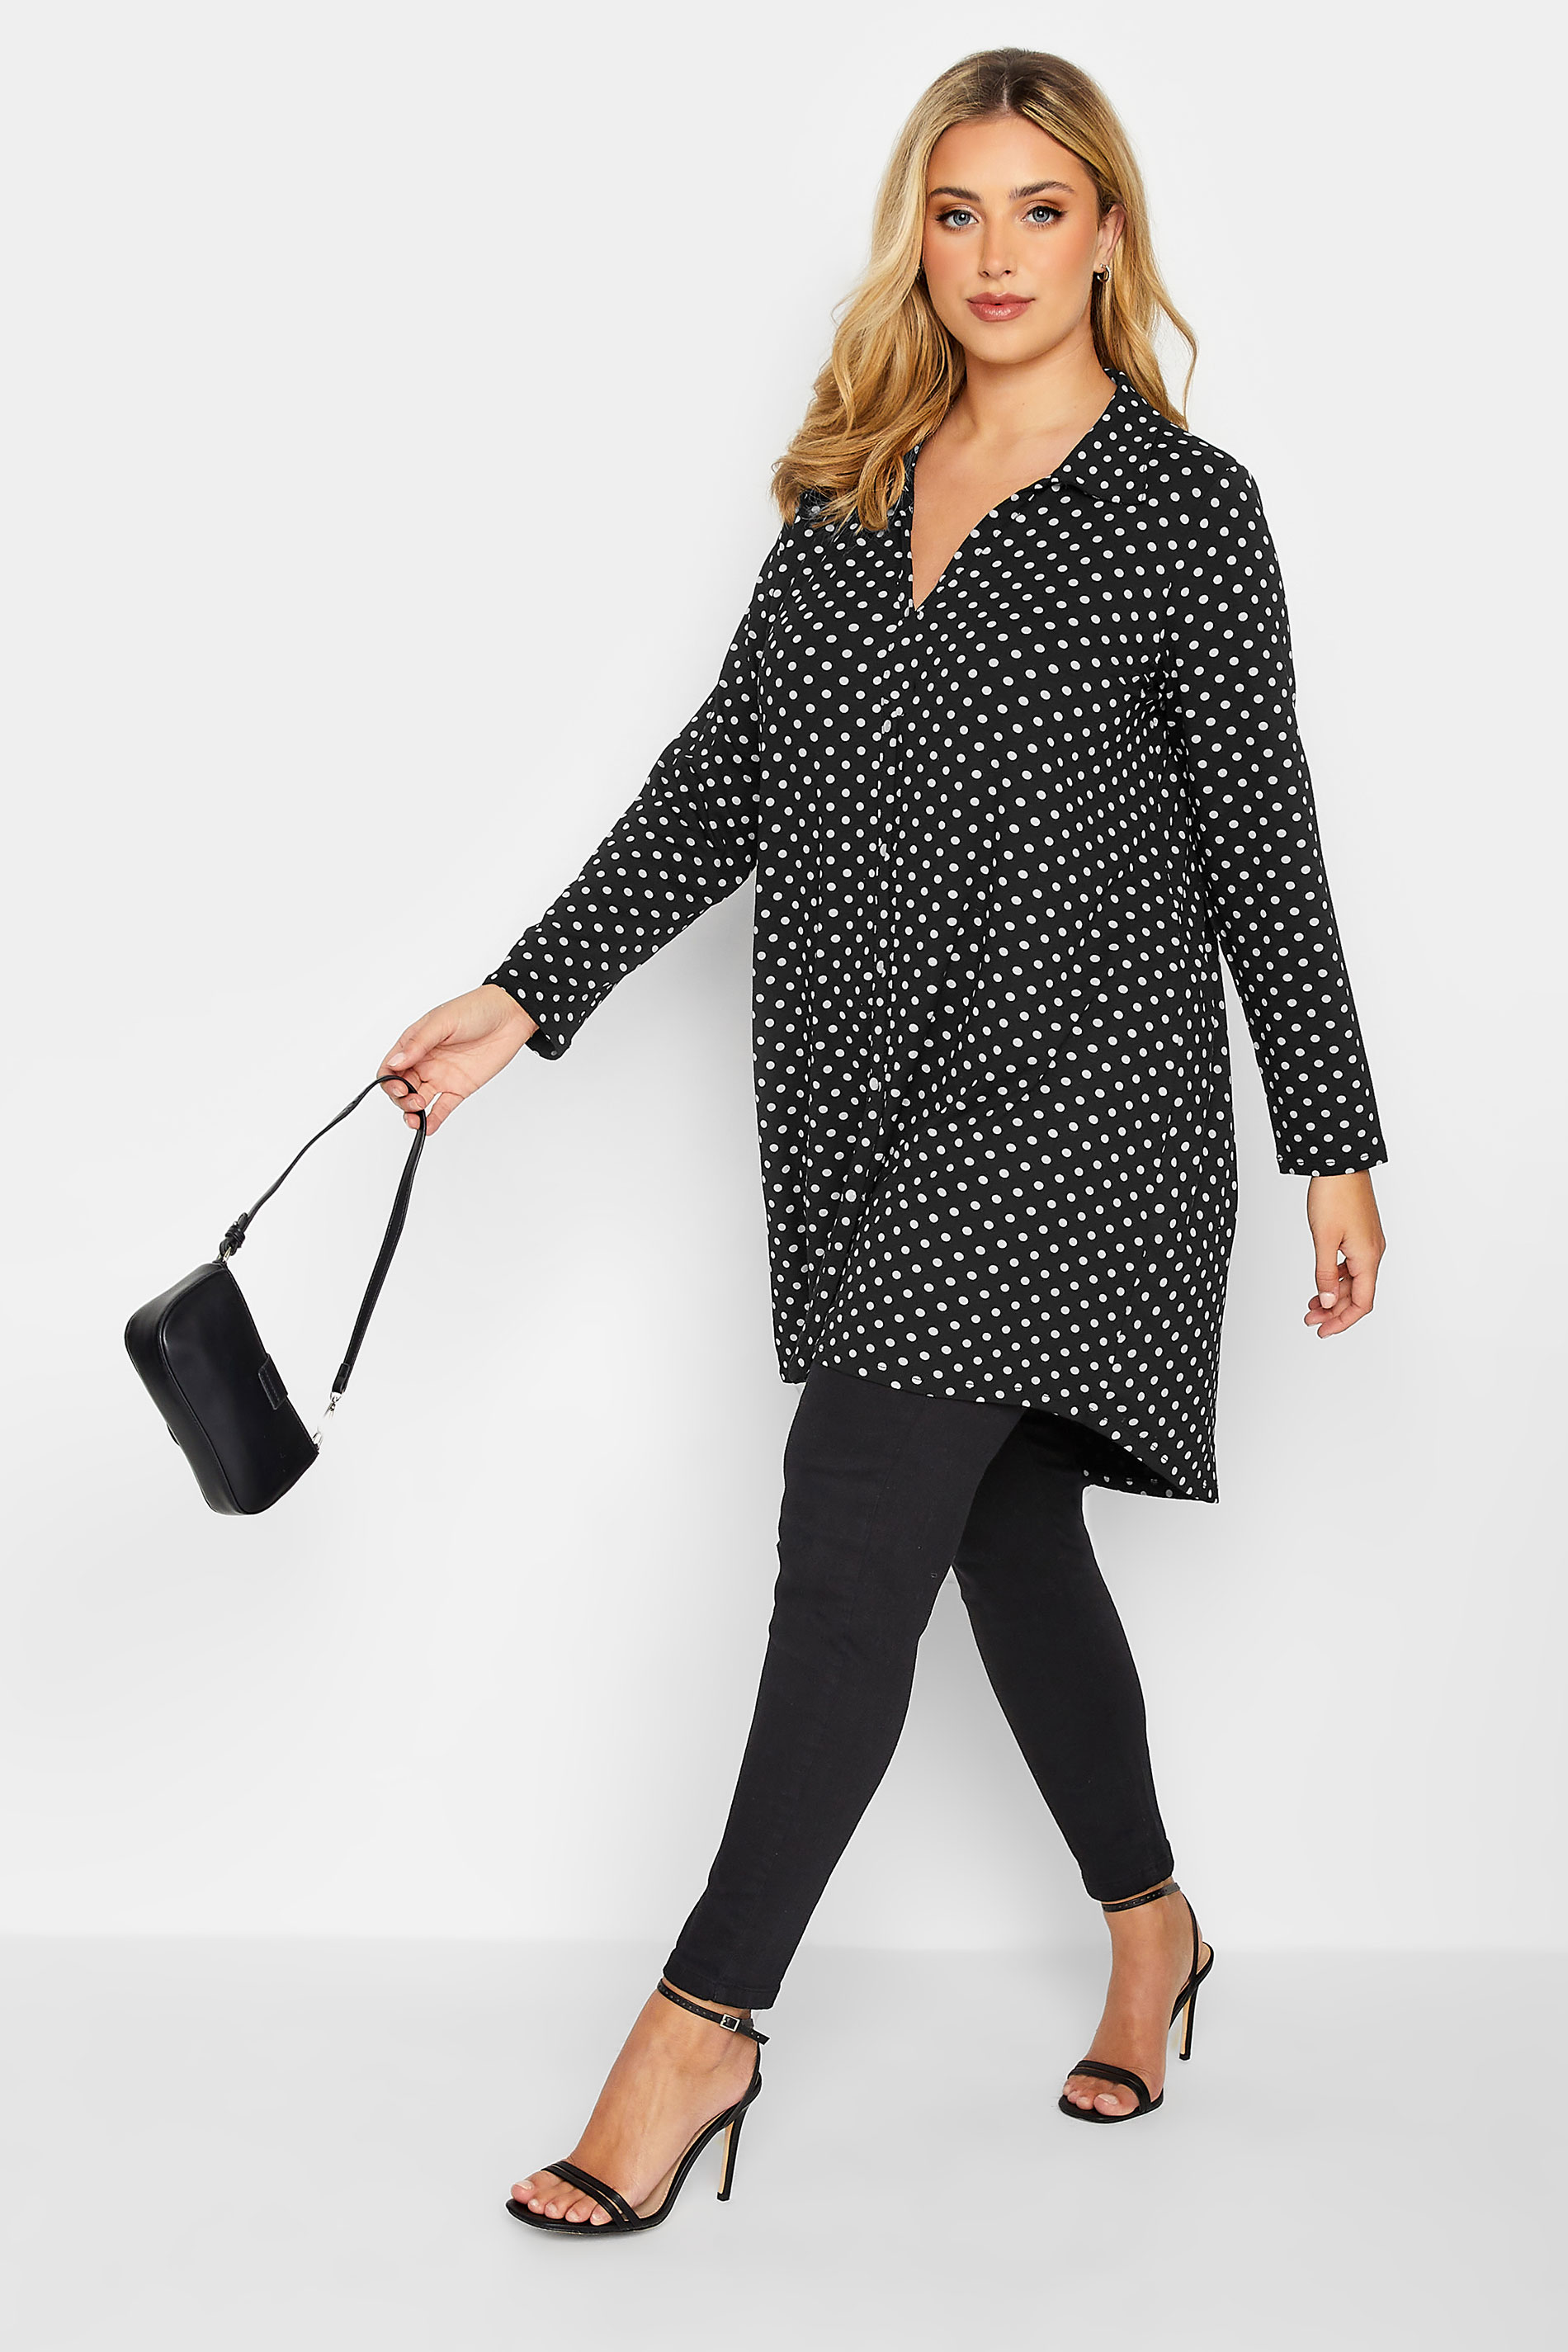 Plus Size Black Polka Dot Long Sleeve Shirt | Yours Clothing 2